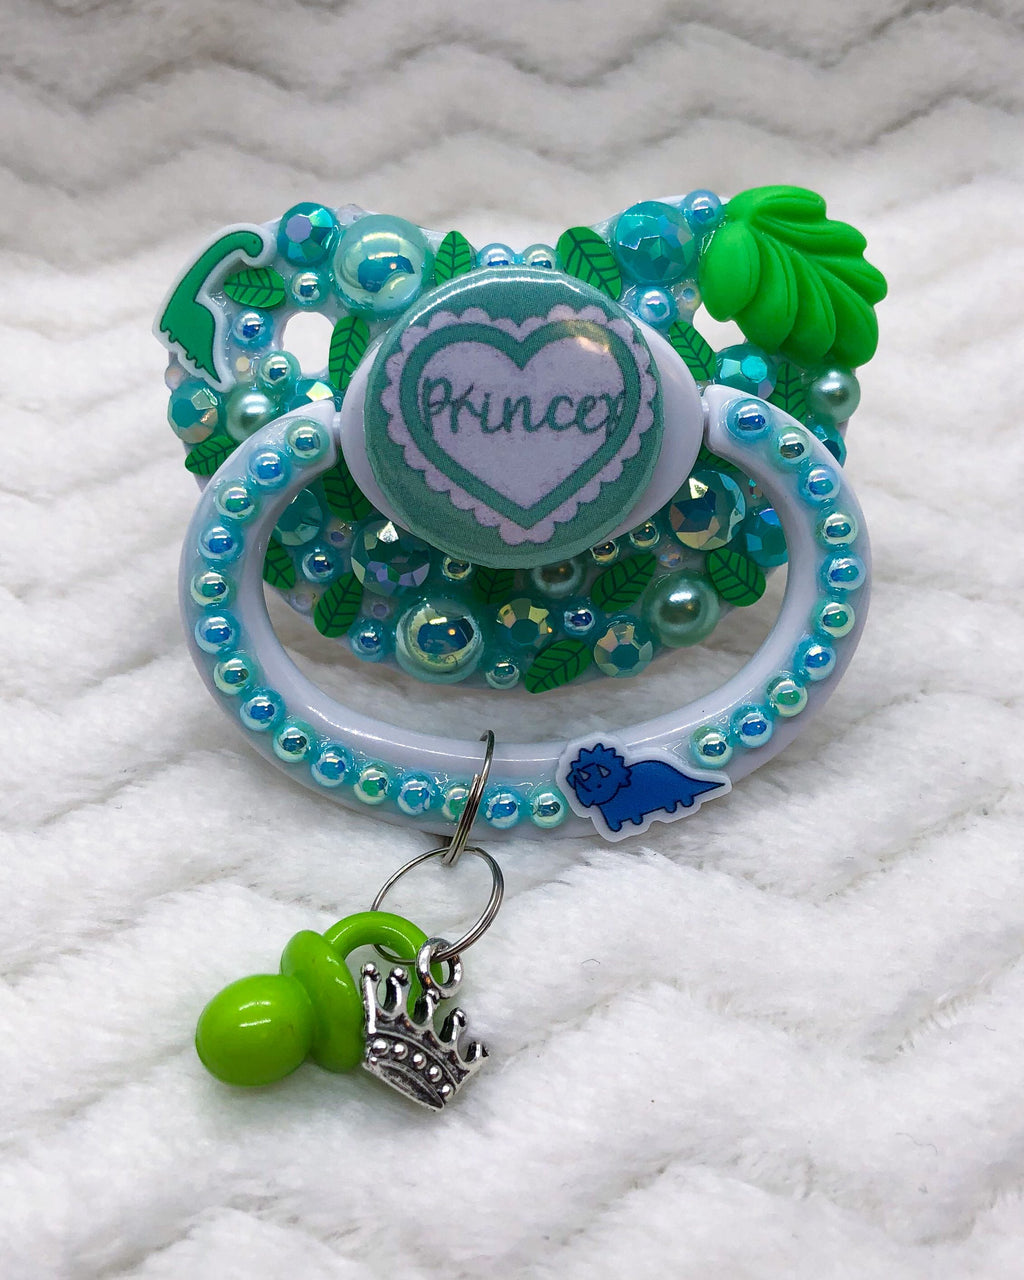 Princex Ruffle Heart Green/White PM Paci (Custom Options Blank to Full Deco)